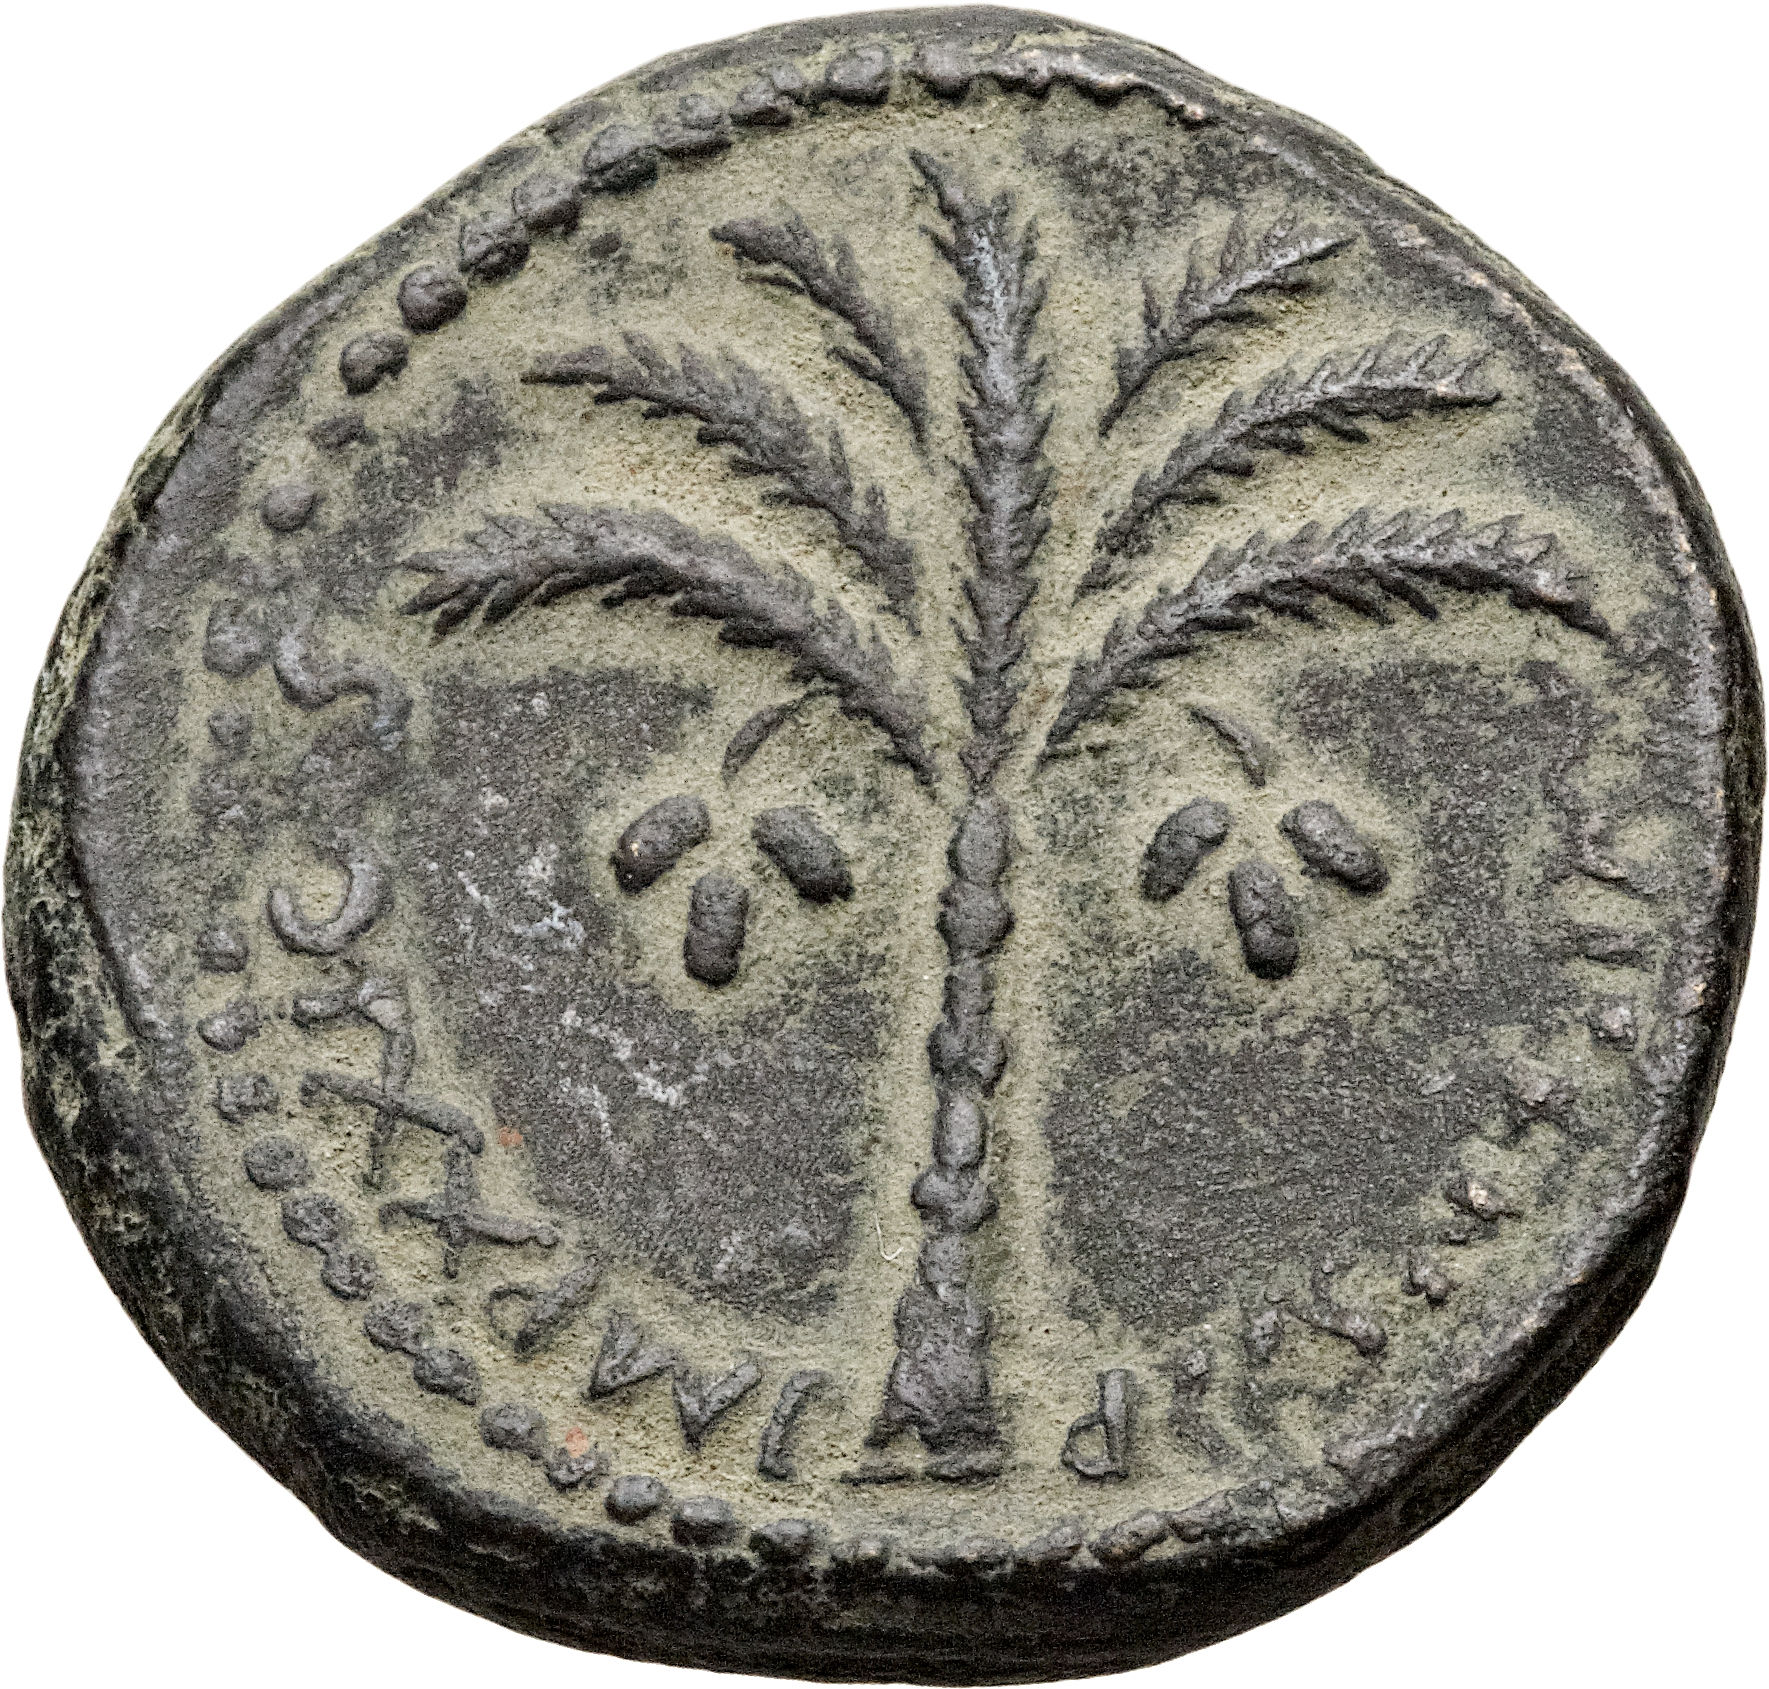 Judean-palm-on-reverse-of-Domitian-coin.jpg